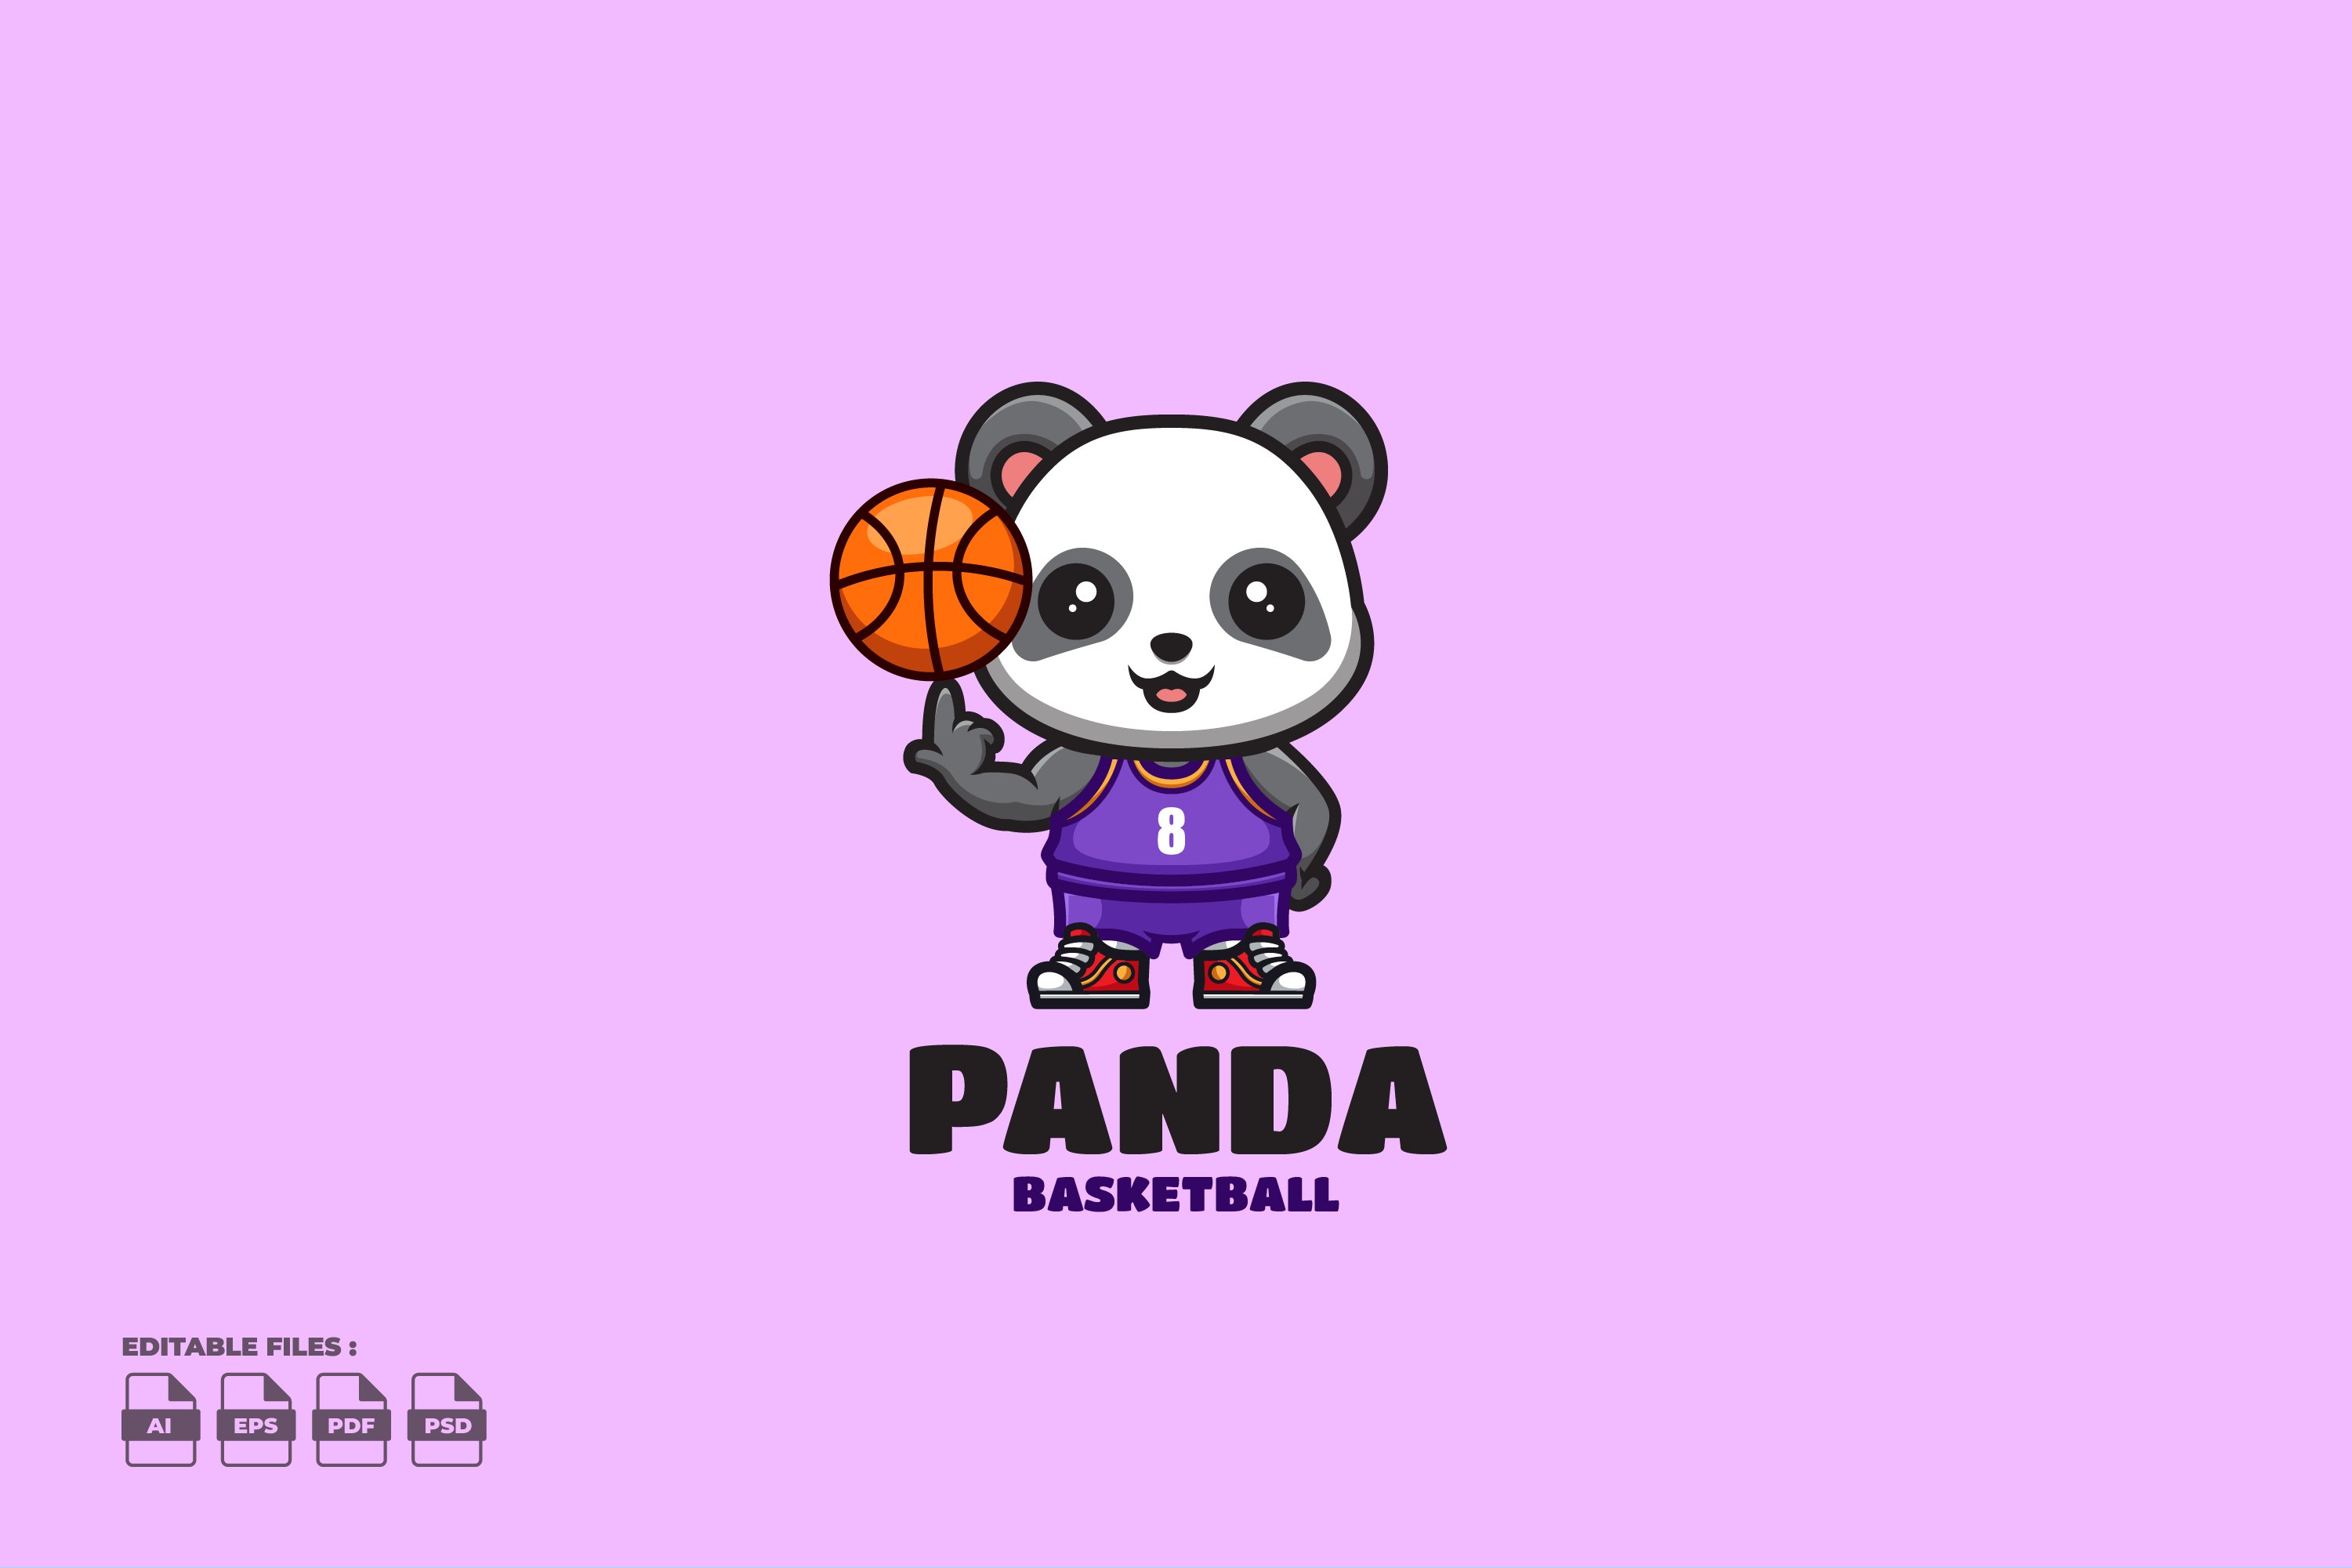 Basketball Panda Cute Mascot Logo cover image.